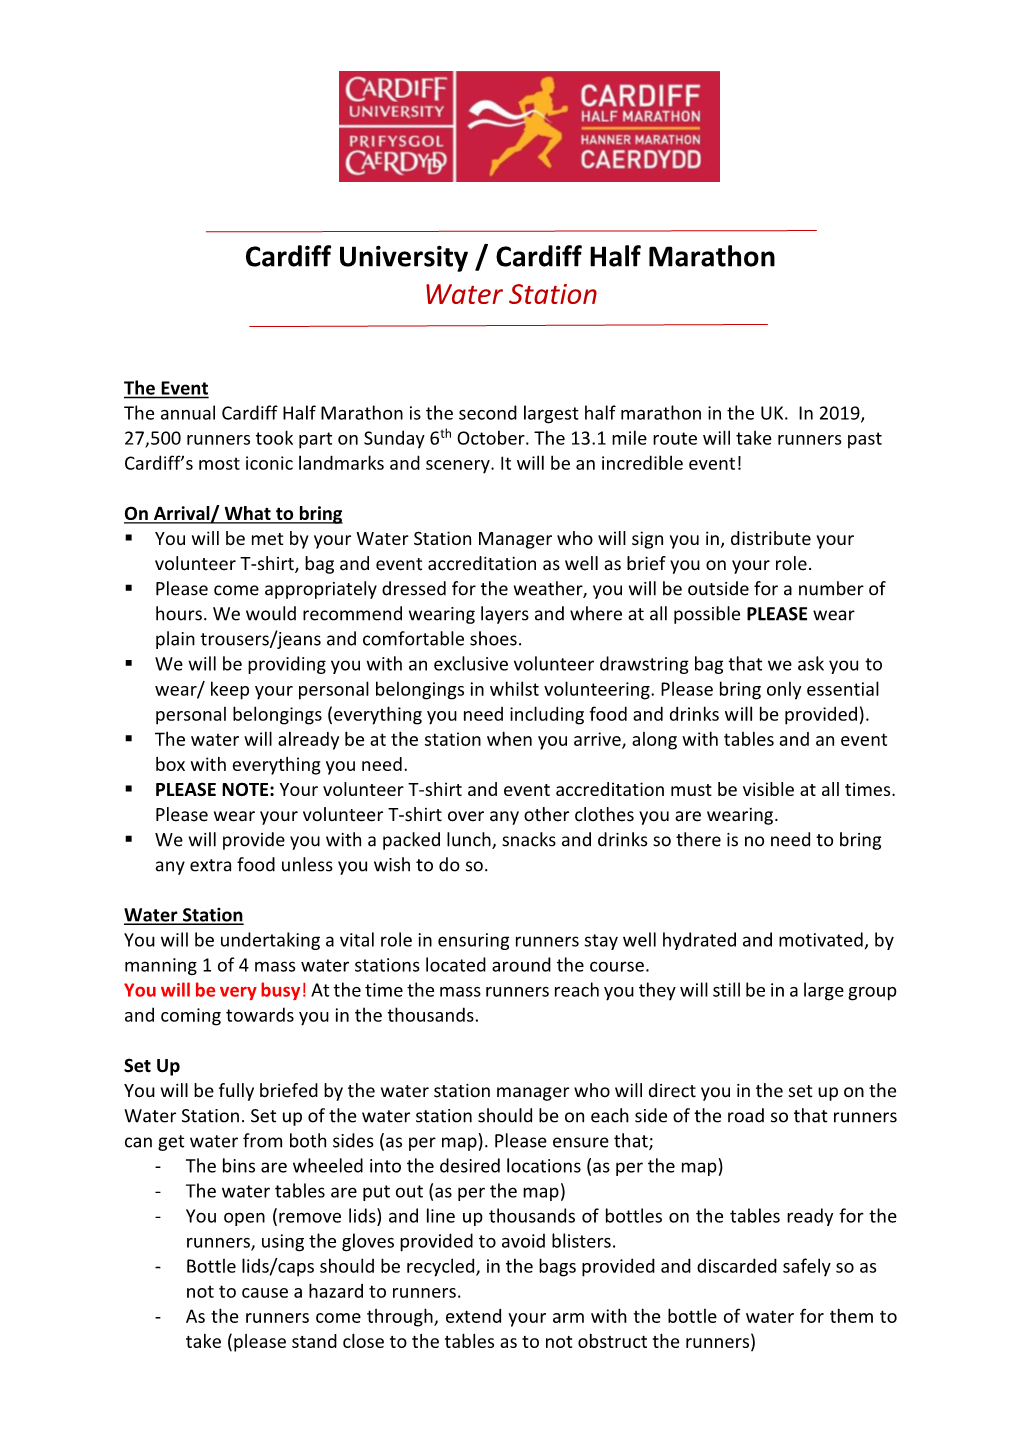 Cardiff University / Cardiff Half Marathon Water Station